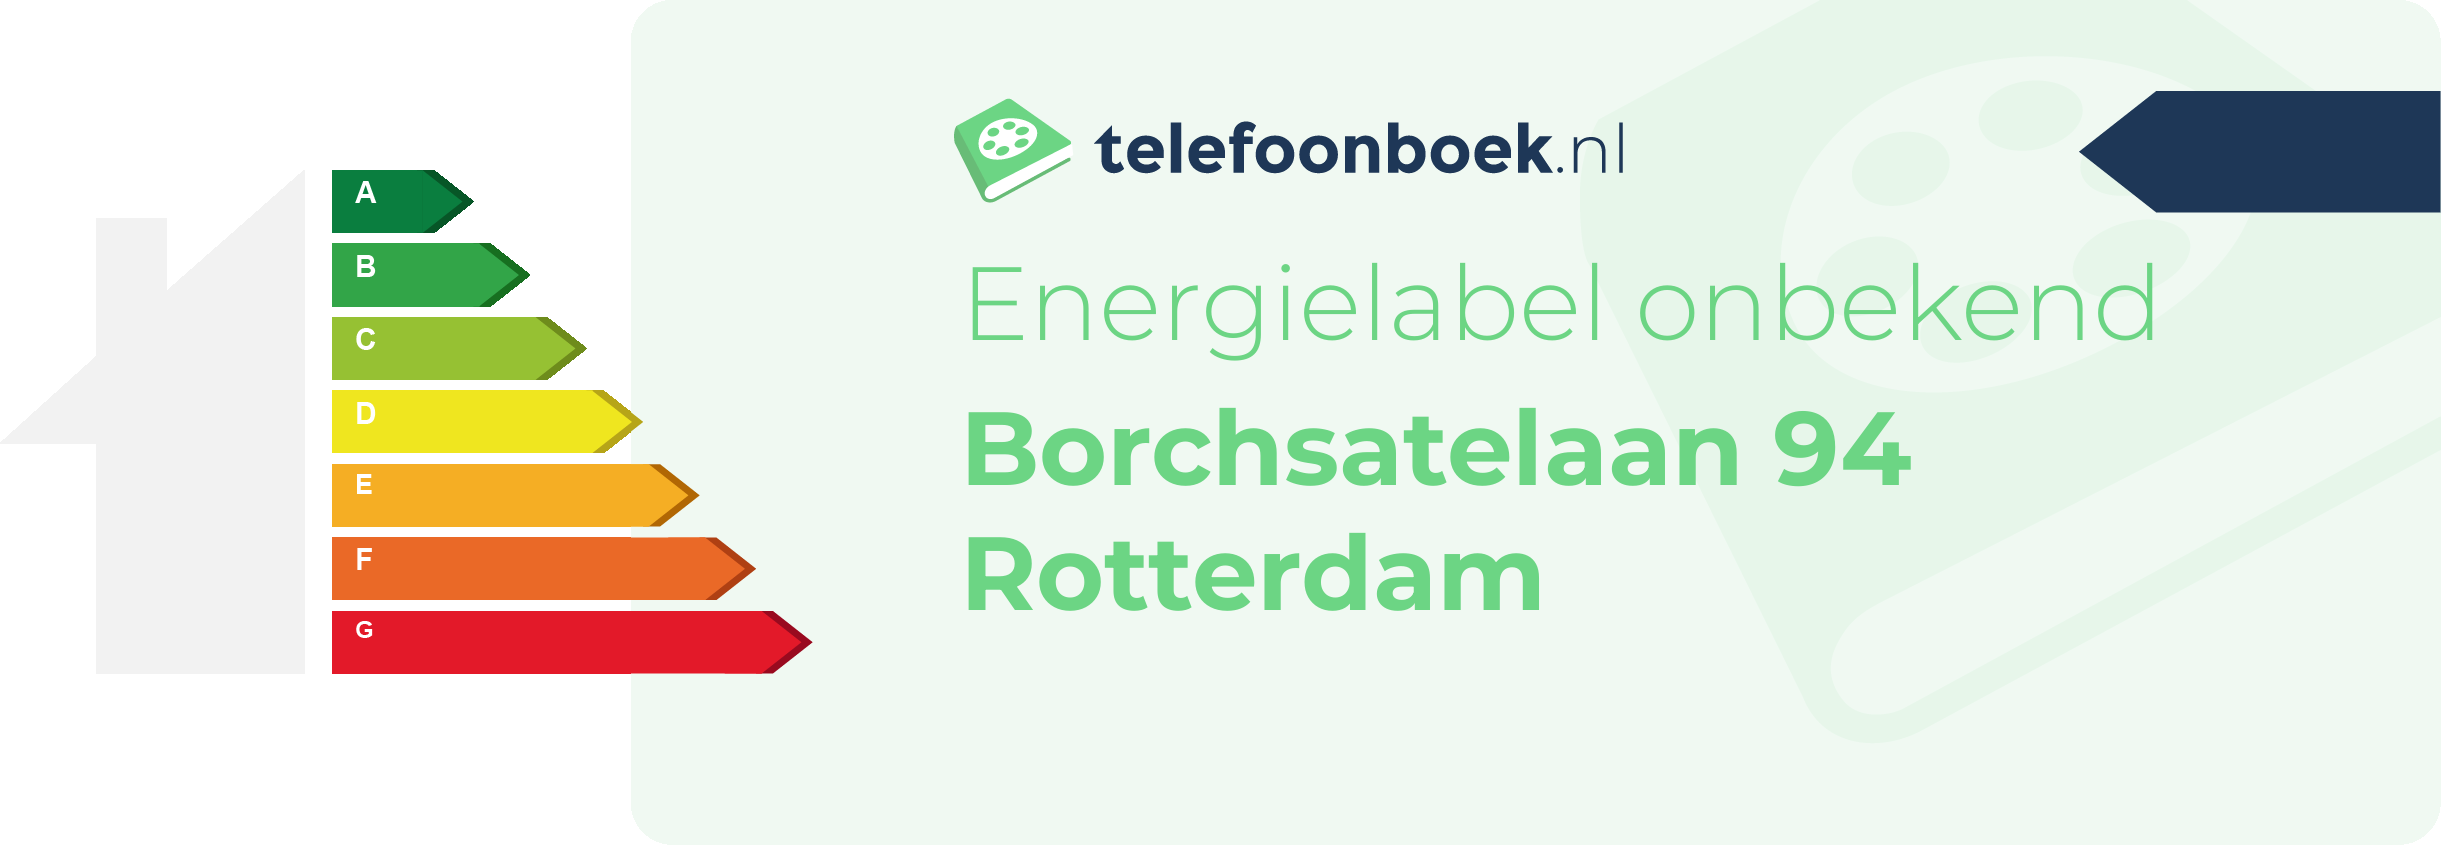 Energielabel Borchsatelaan 94 Rotterdam